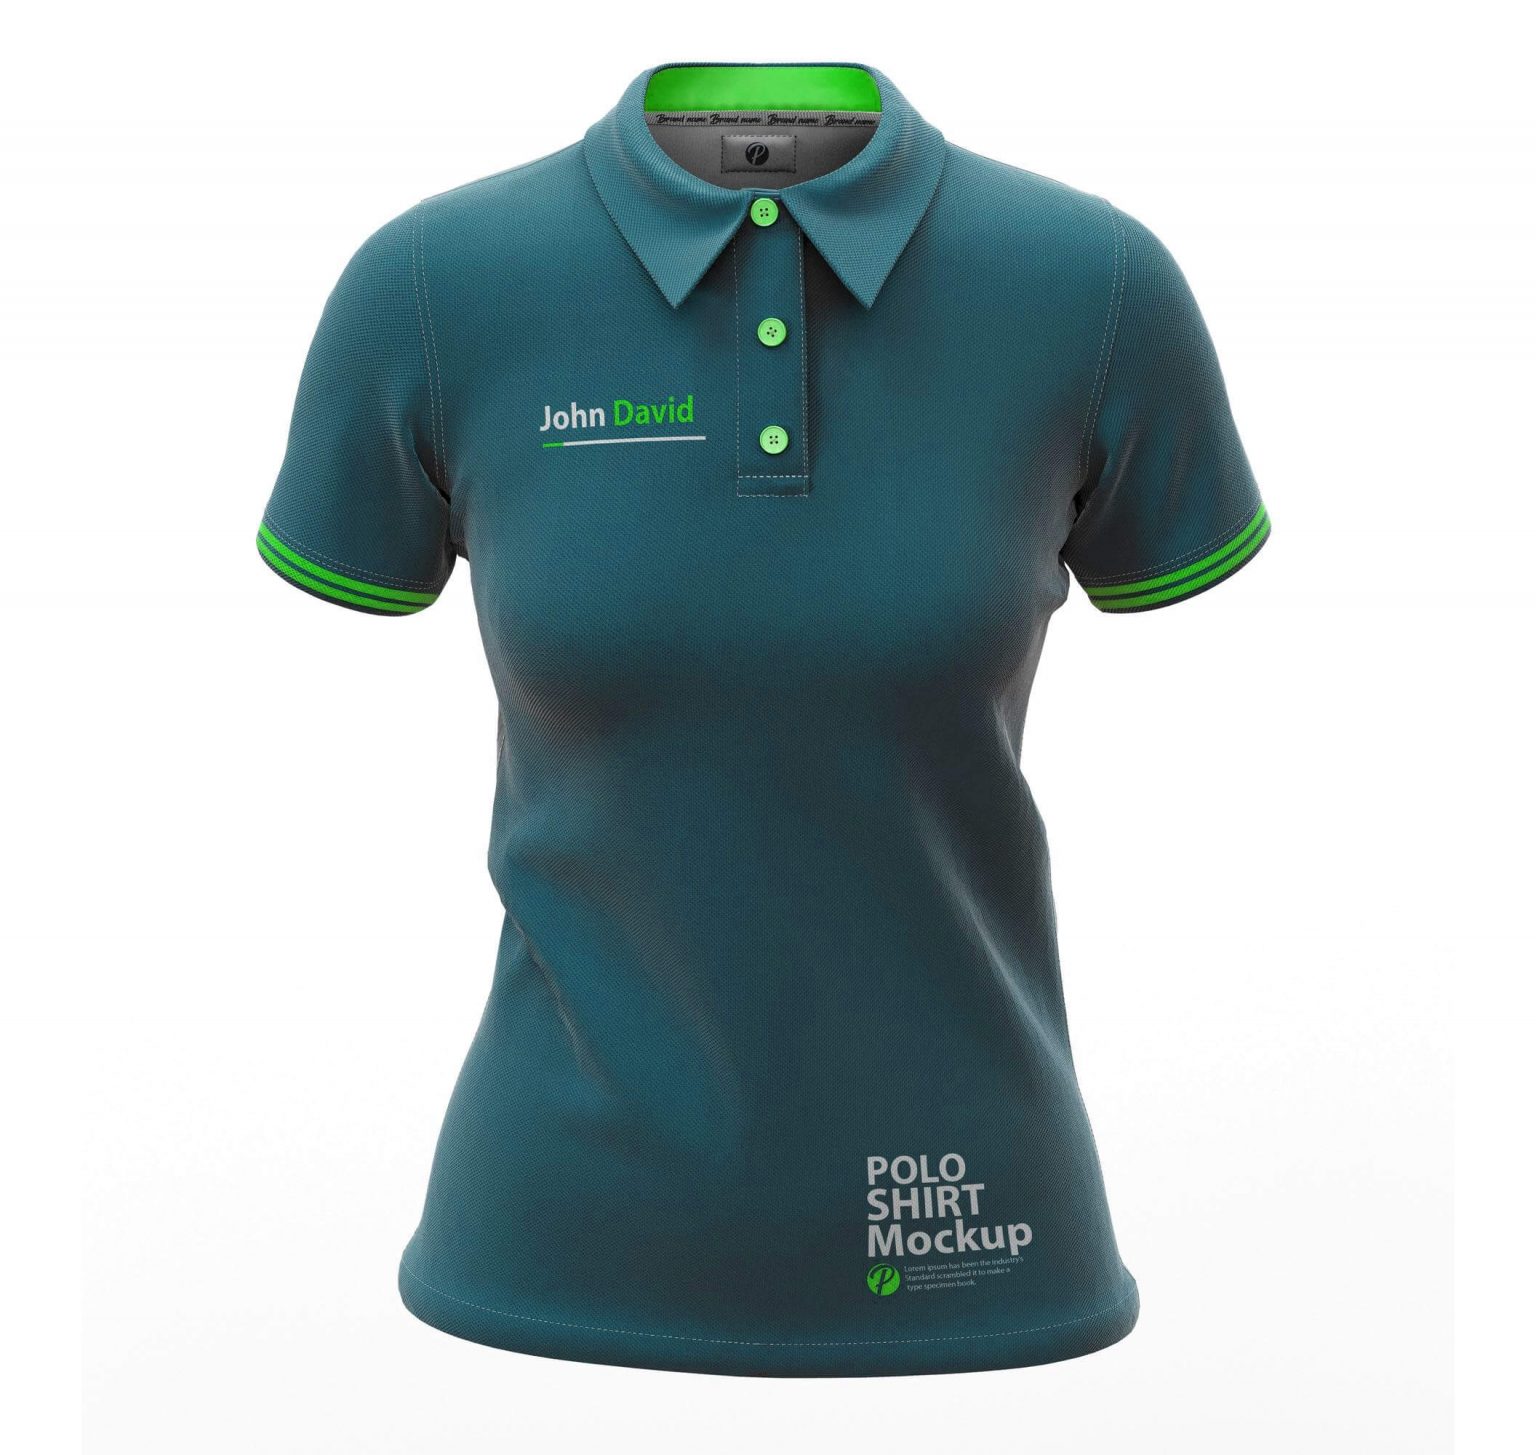 Free Women Polo T-Shirt Mockup PSD - PsFiles